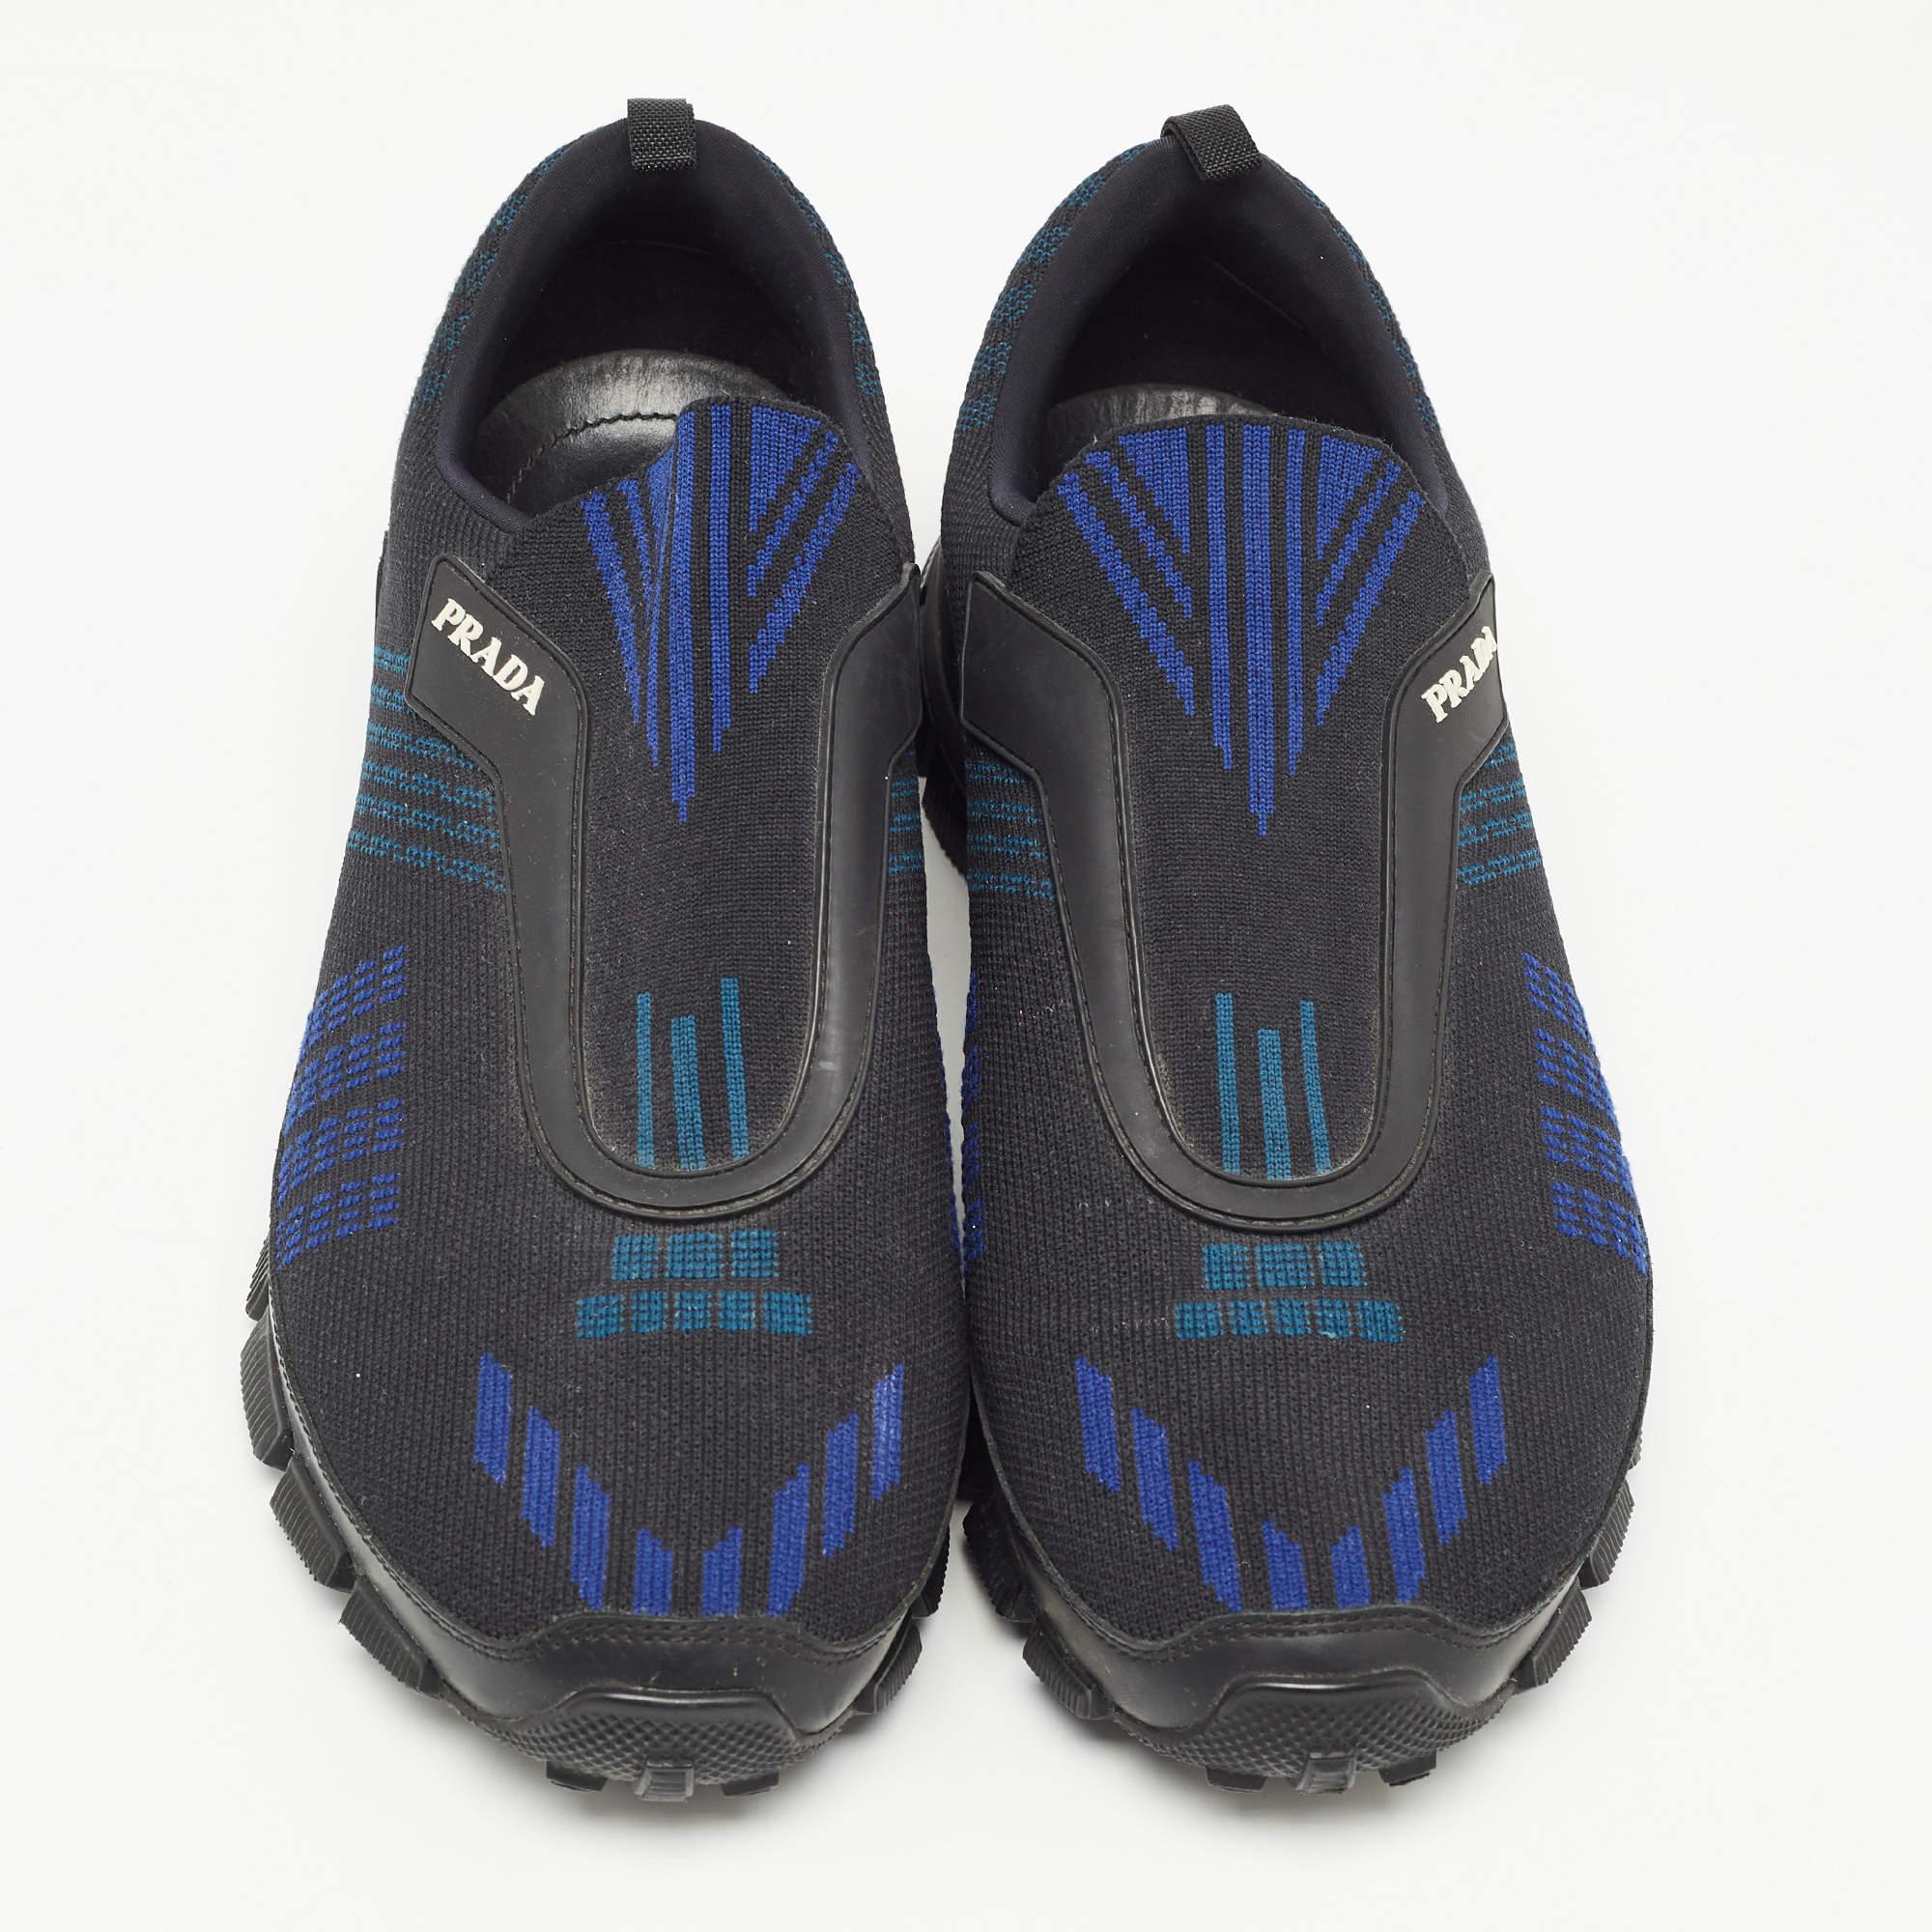 Prada Black/Blue Knit Fabric Low Top Sneakers Size 42.5 In Excellent Condition For Sale In Dubai, Al Qouz 2